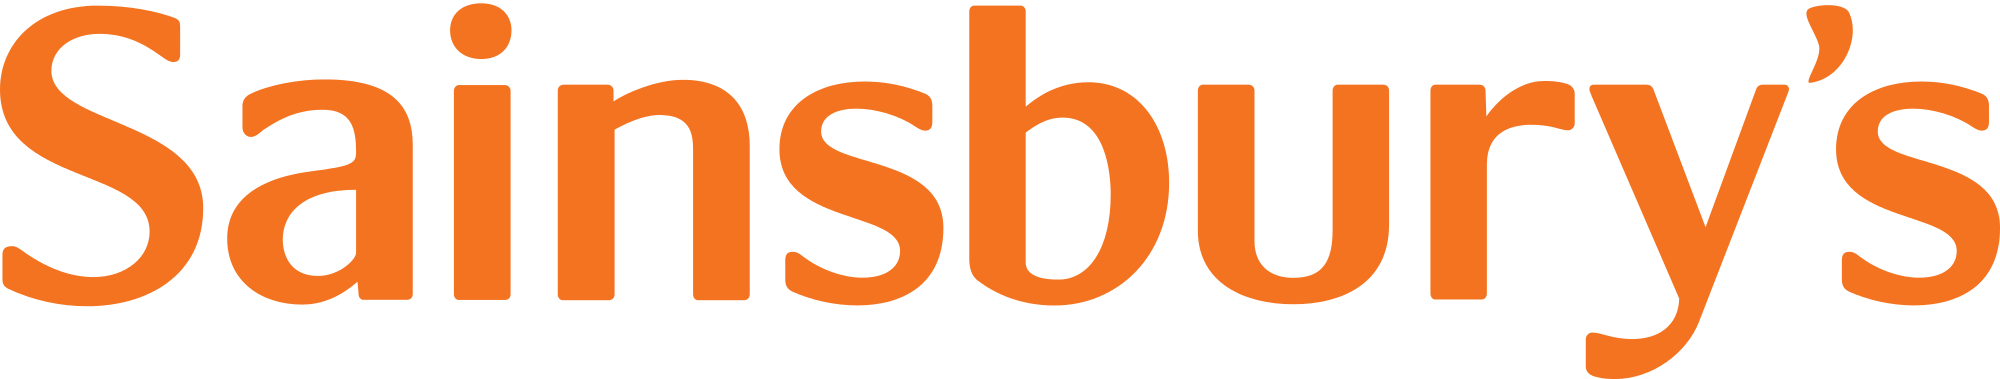 Sainsbury's logo.svg